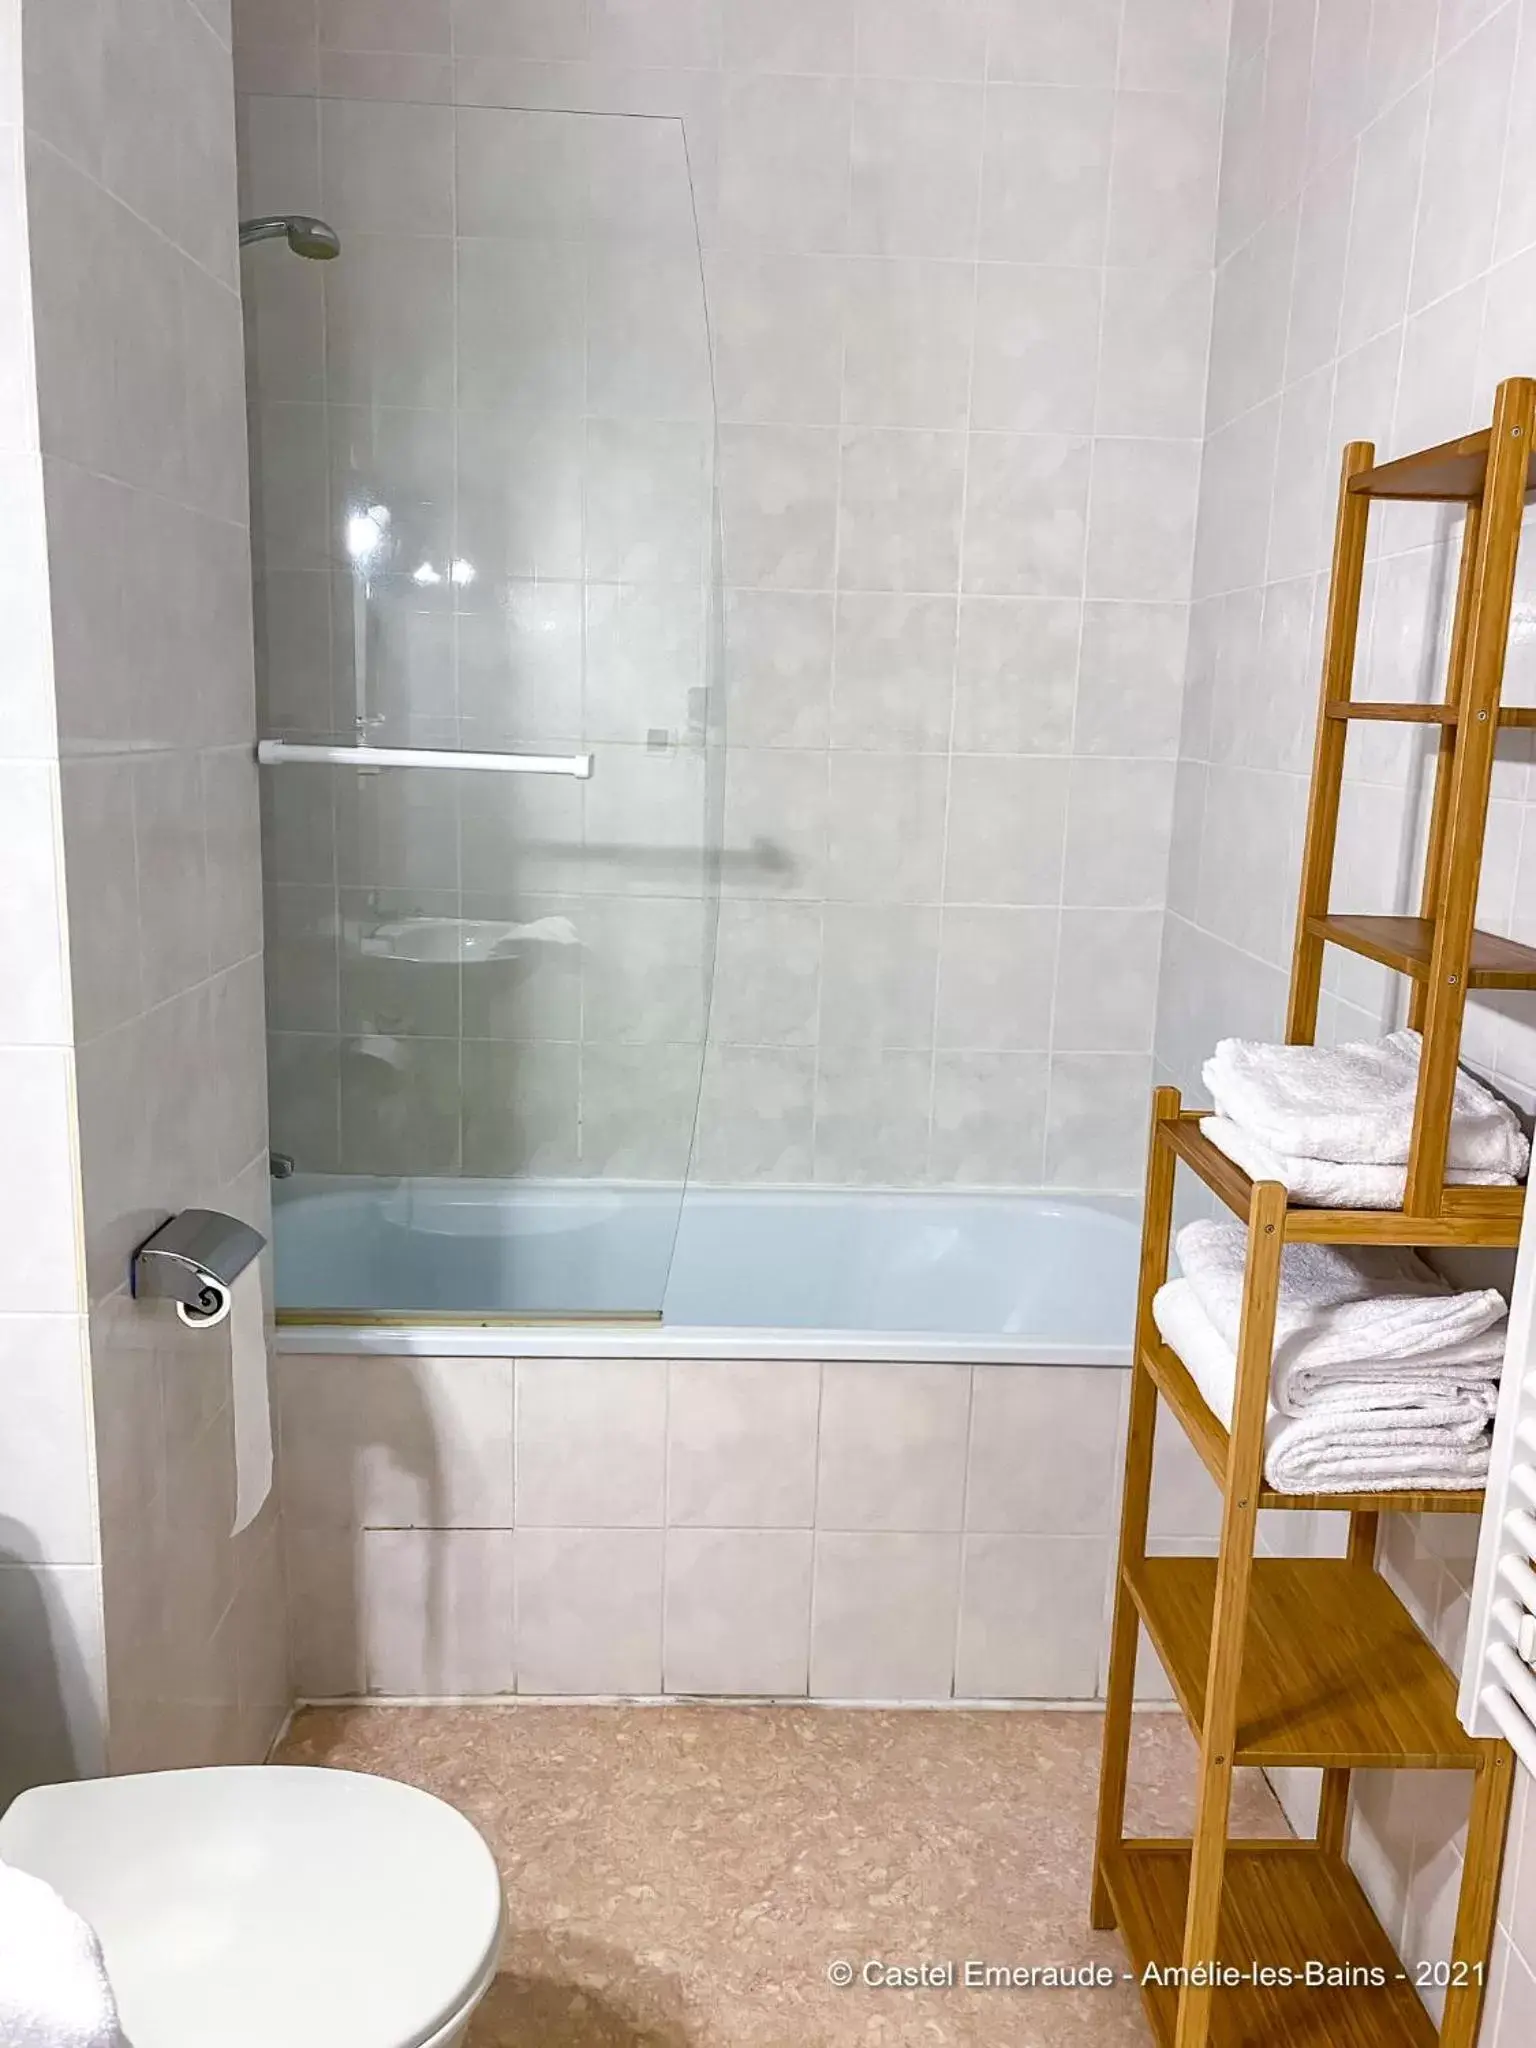 Bathroom in Appart'Hotel Castel Emeraude, Charme et Caractère